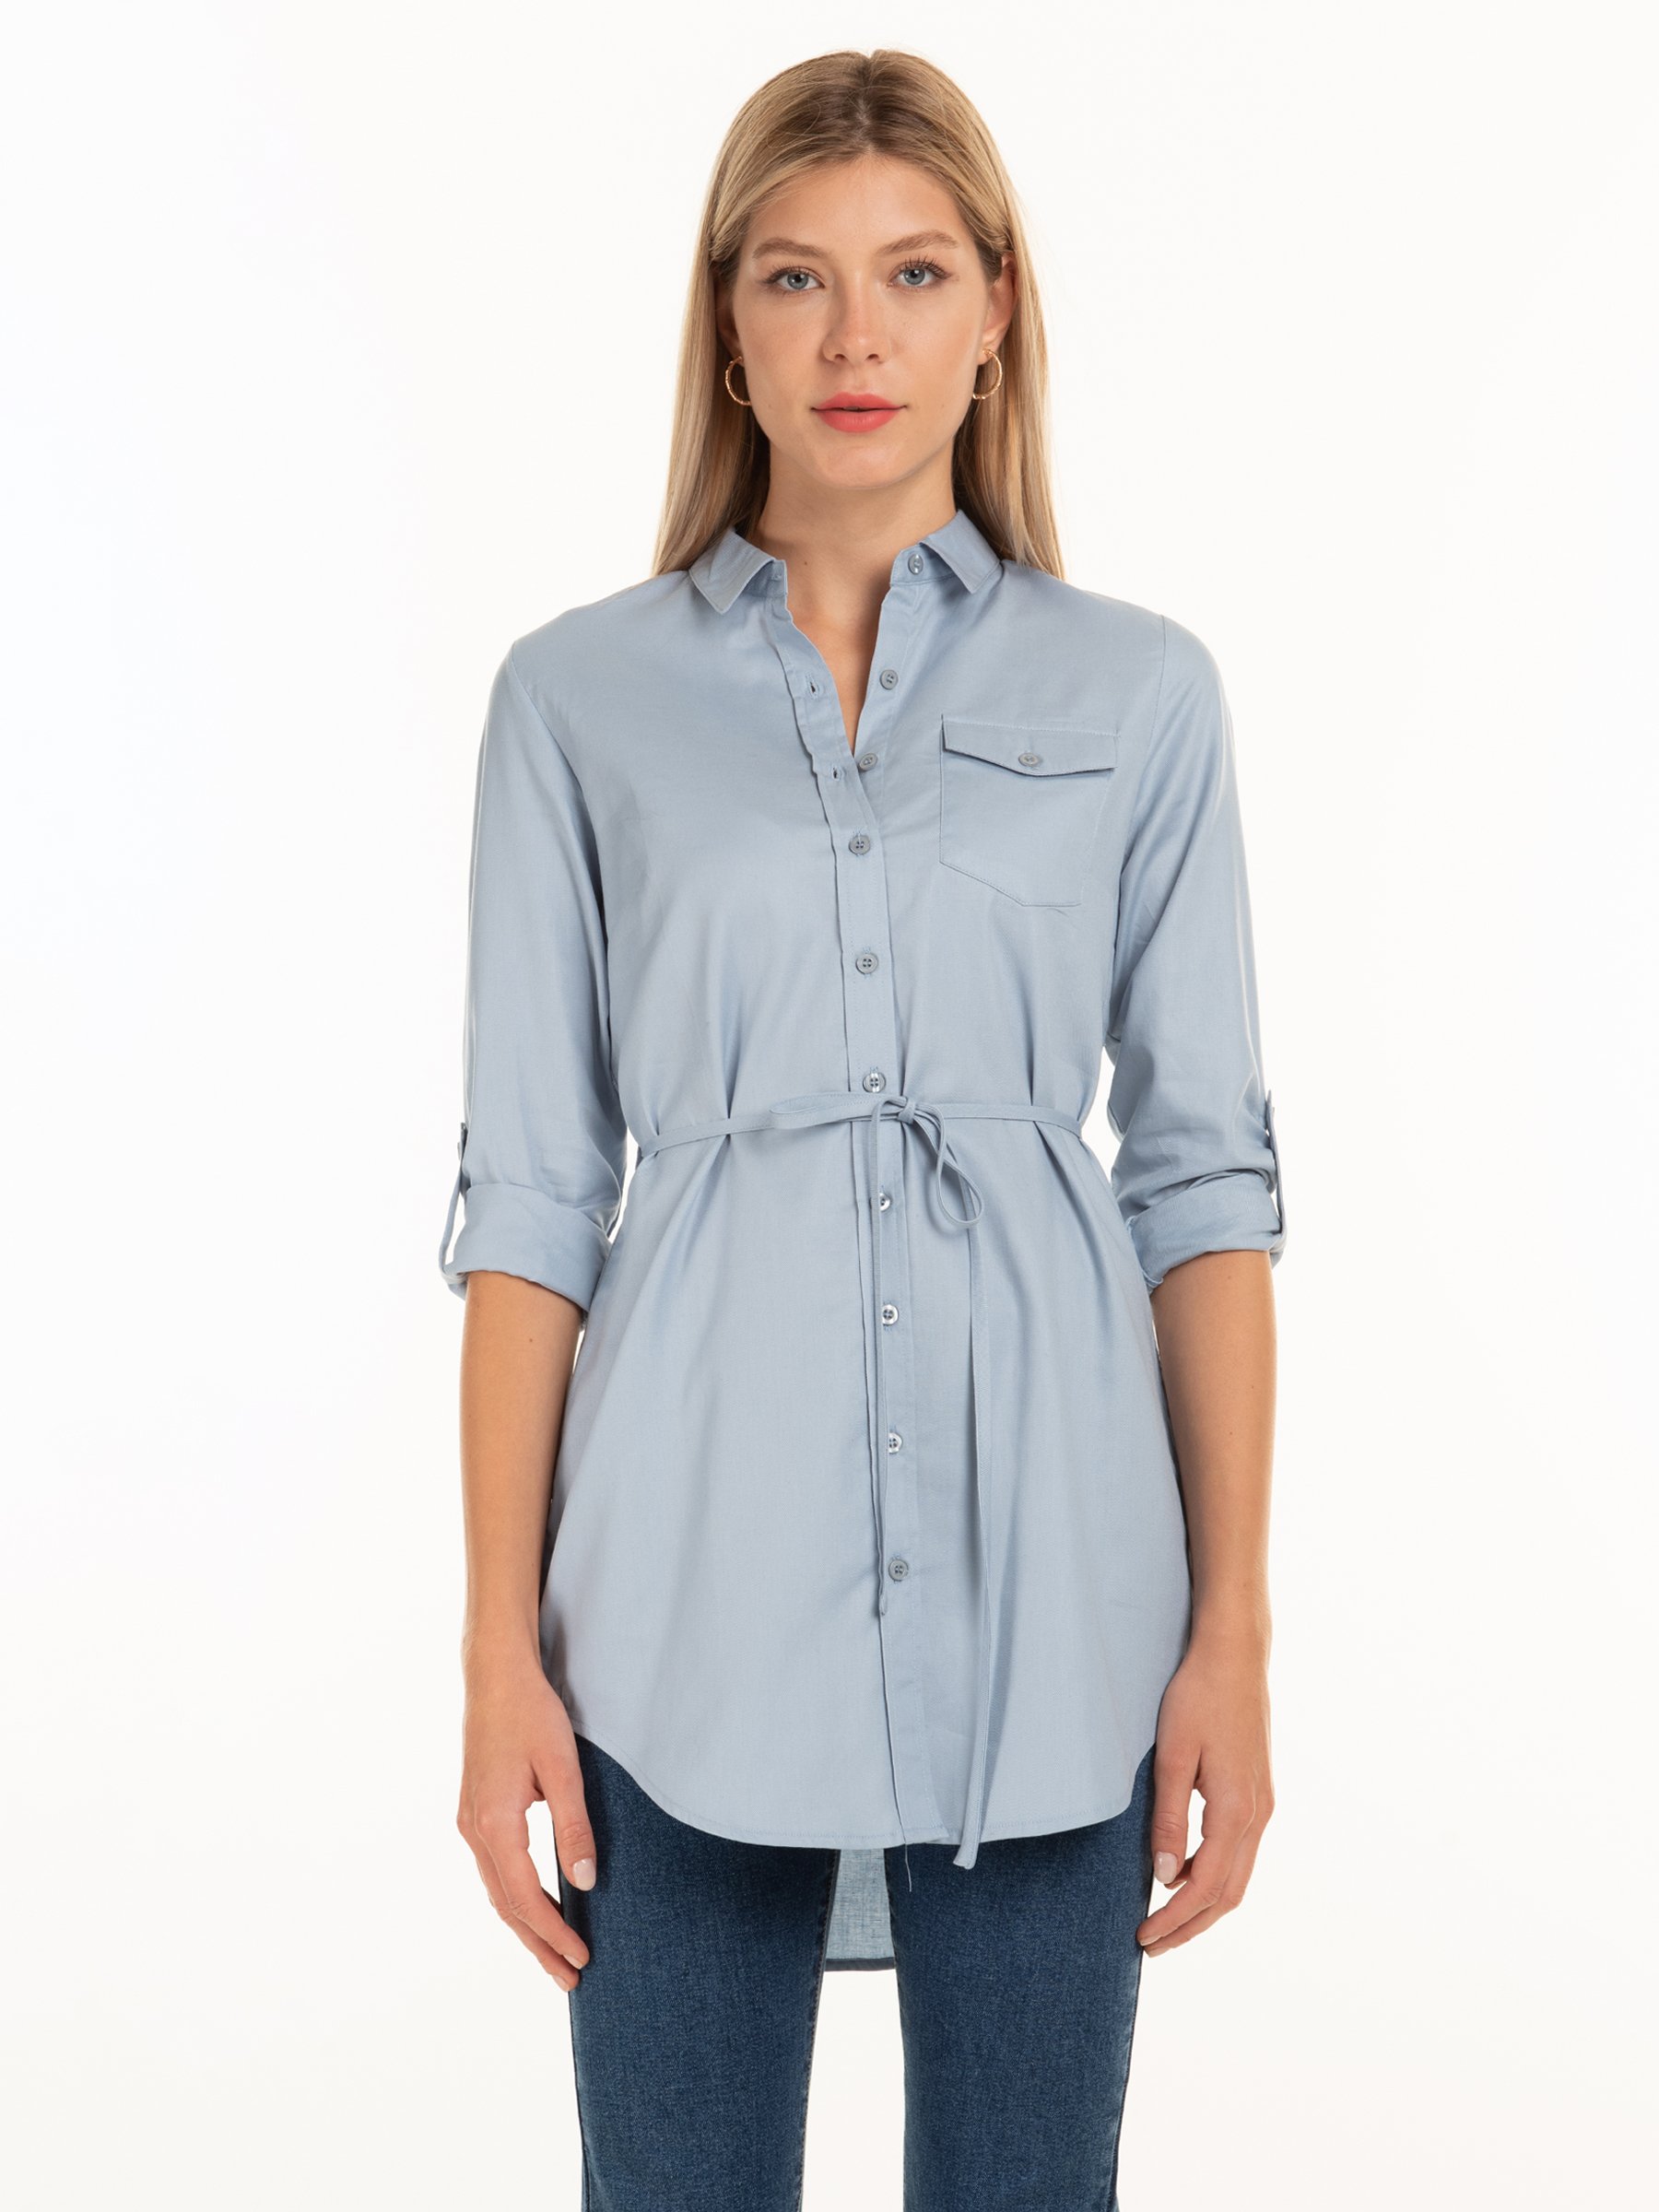 WOMEN FASHION Jumpers & Sweatshirts Ribbed discount 72% Primark cardigan Blue 42                  EU 